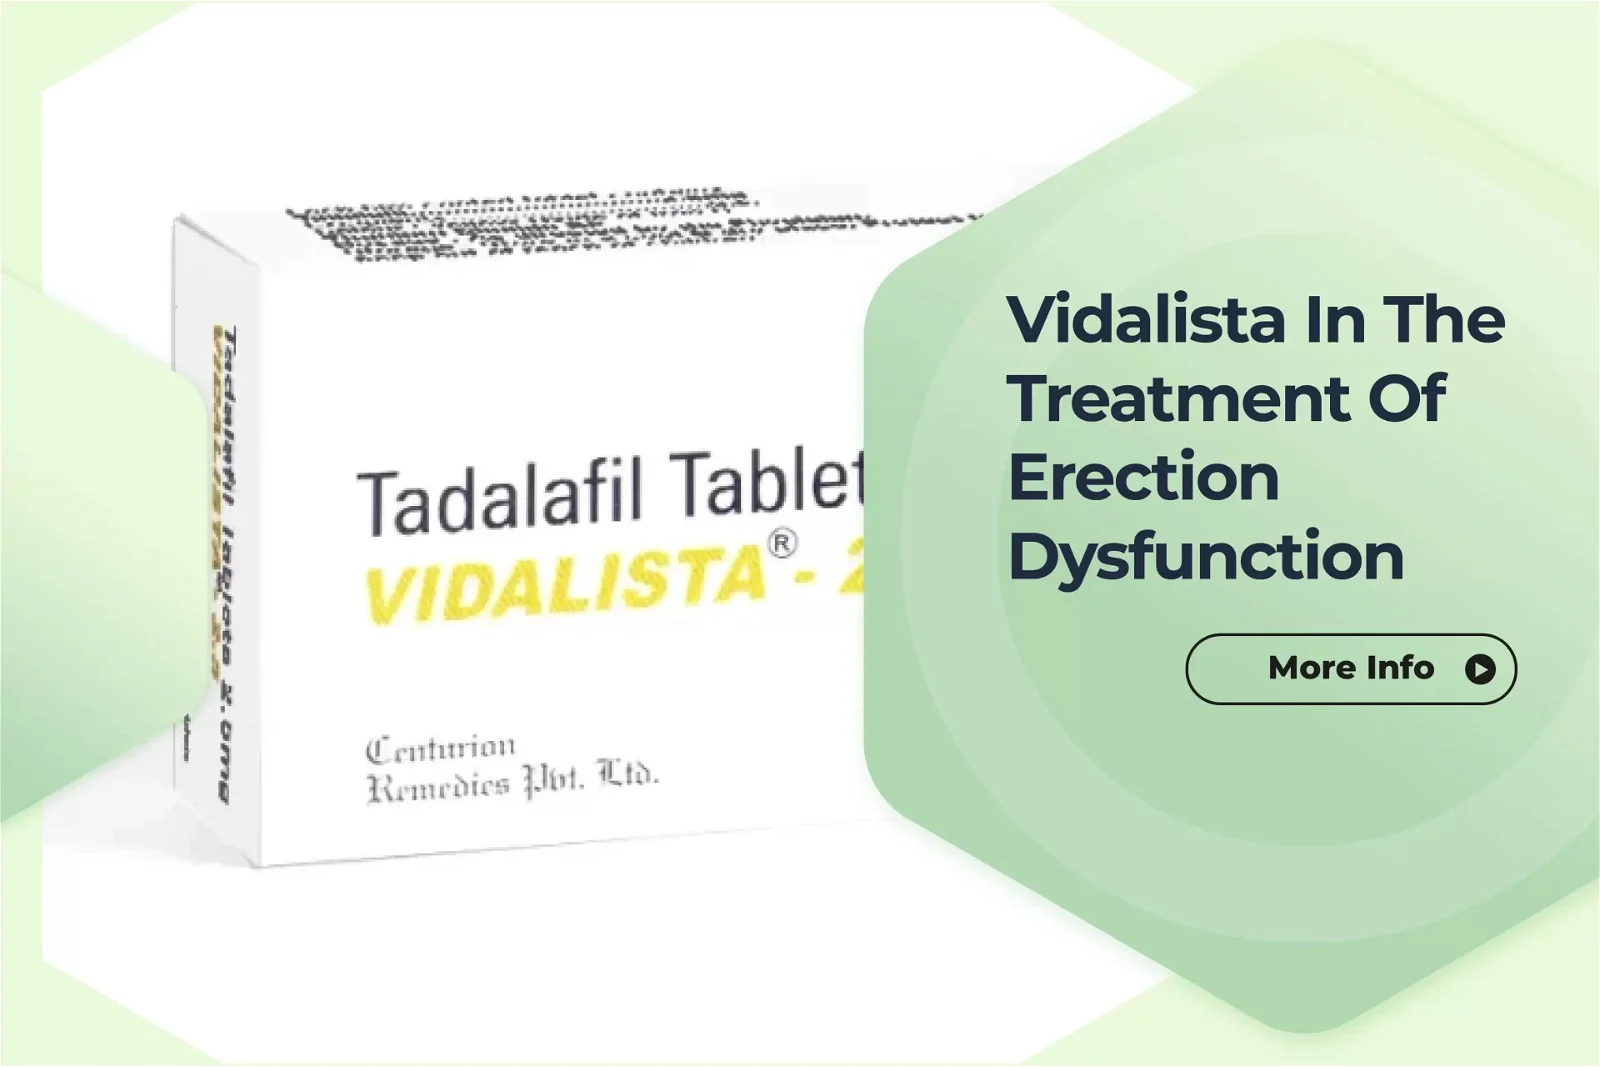 Vidalista in the Treatment of Erection Dysfunction